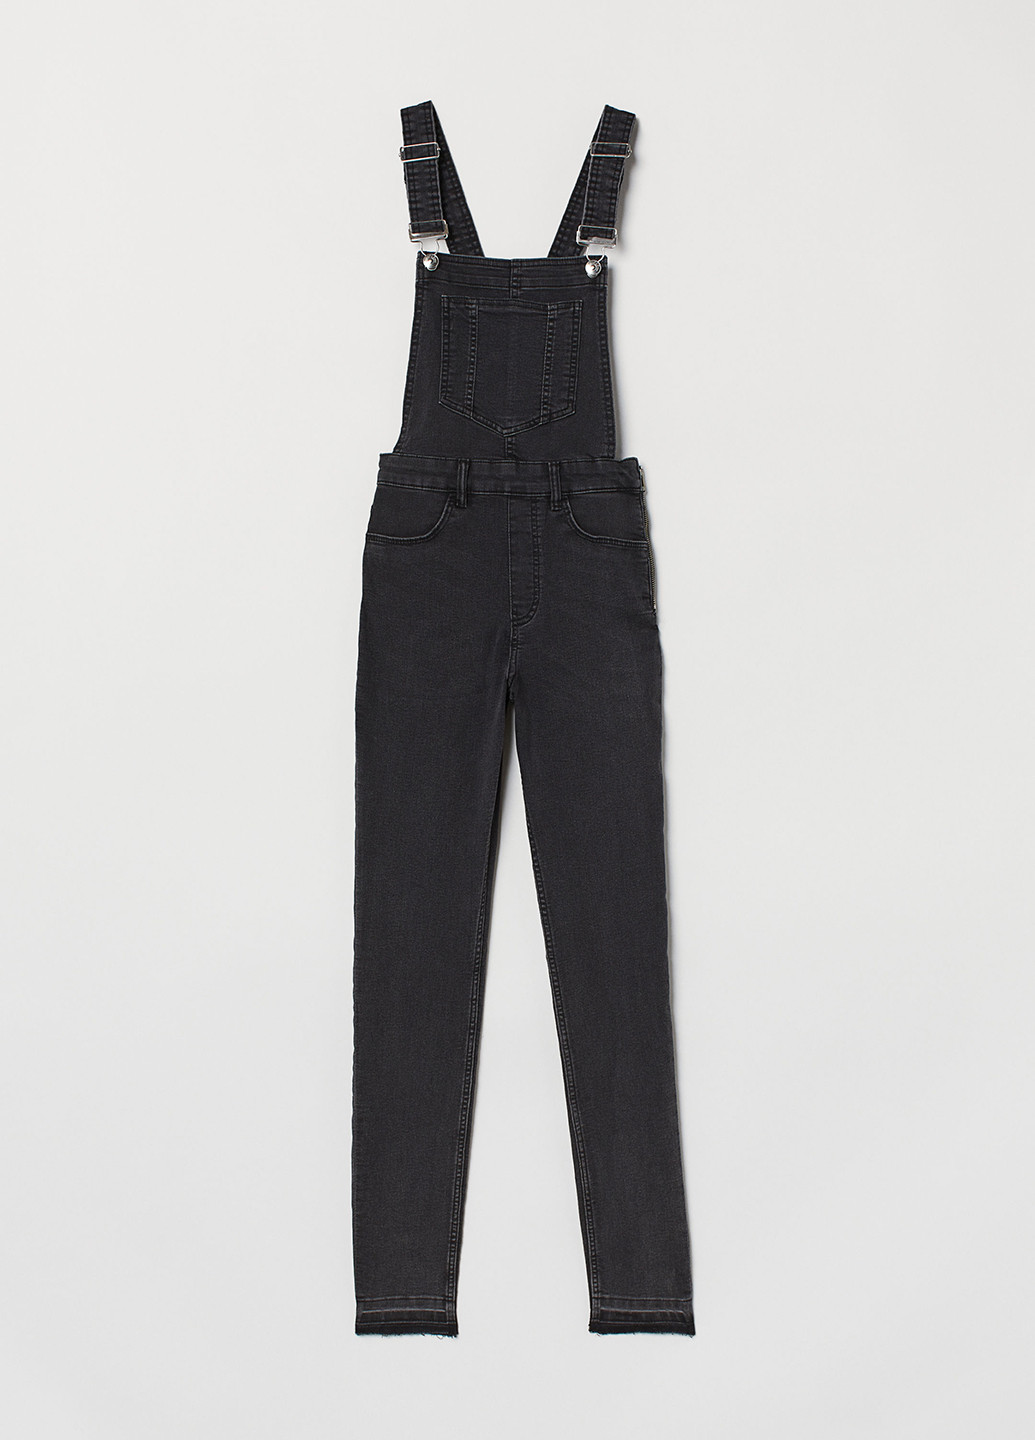 Комбинезон H&M комбинезон-брюки однотонный тёмно-серый денил хлопок